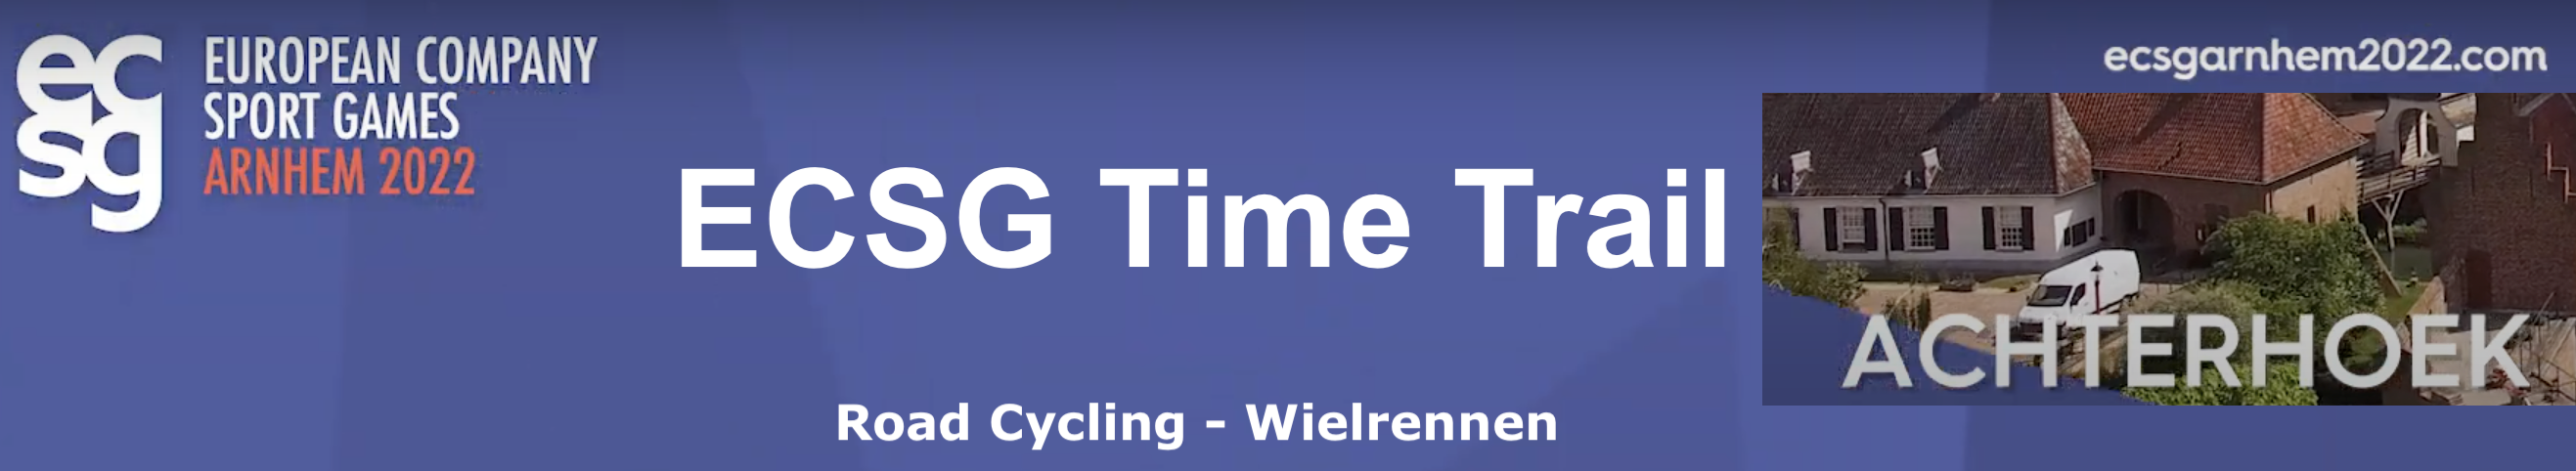 ECSG TimeTrial Arnhem op 23-06-2022